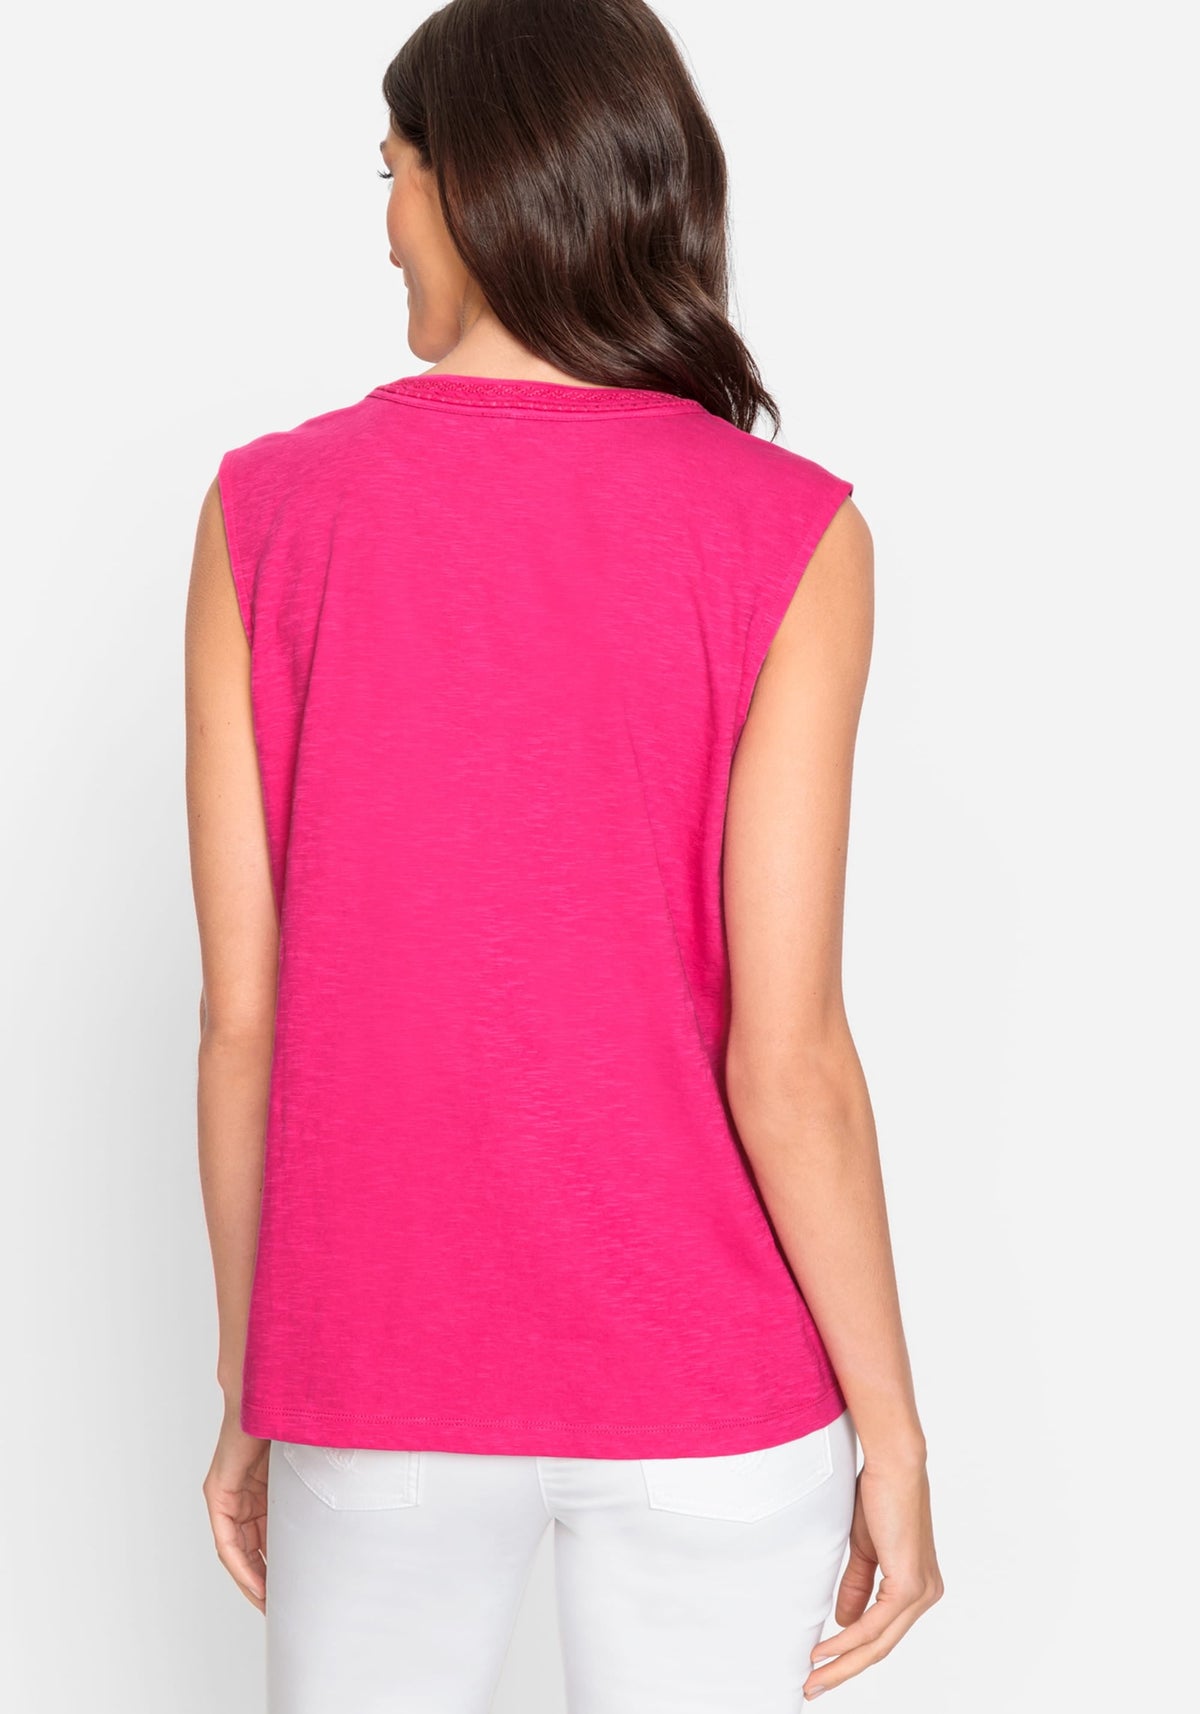 100% Cotton Sleeveless Embroidered Tunic Shell T-Shirt